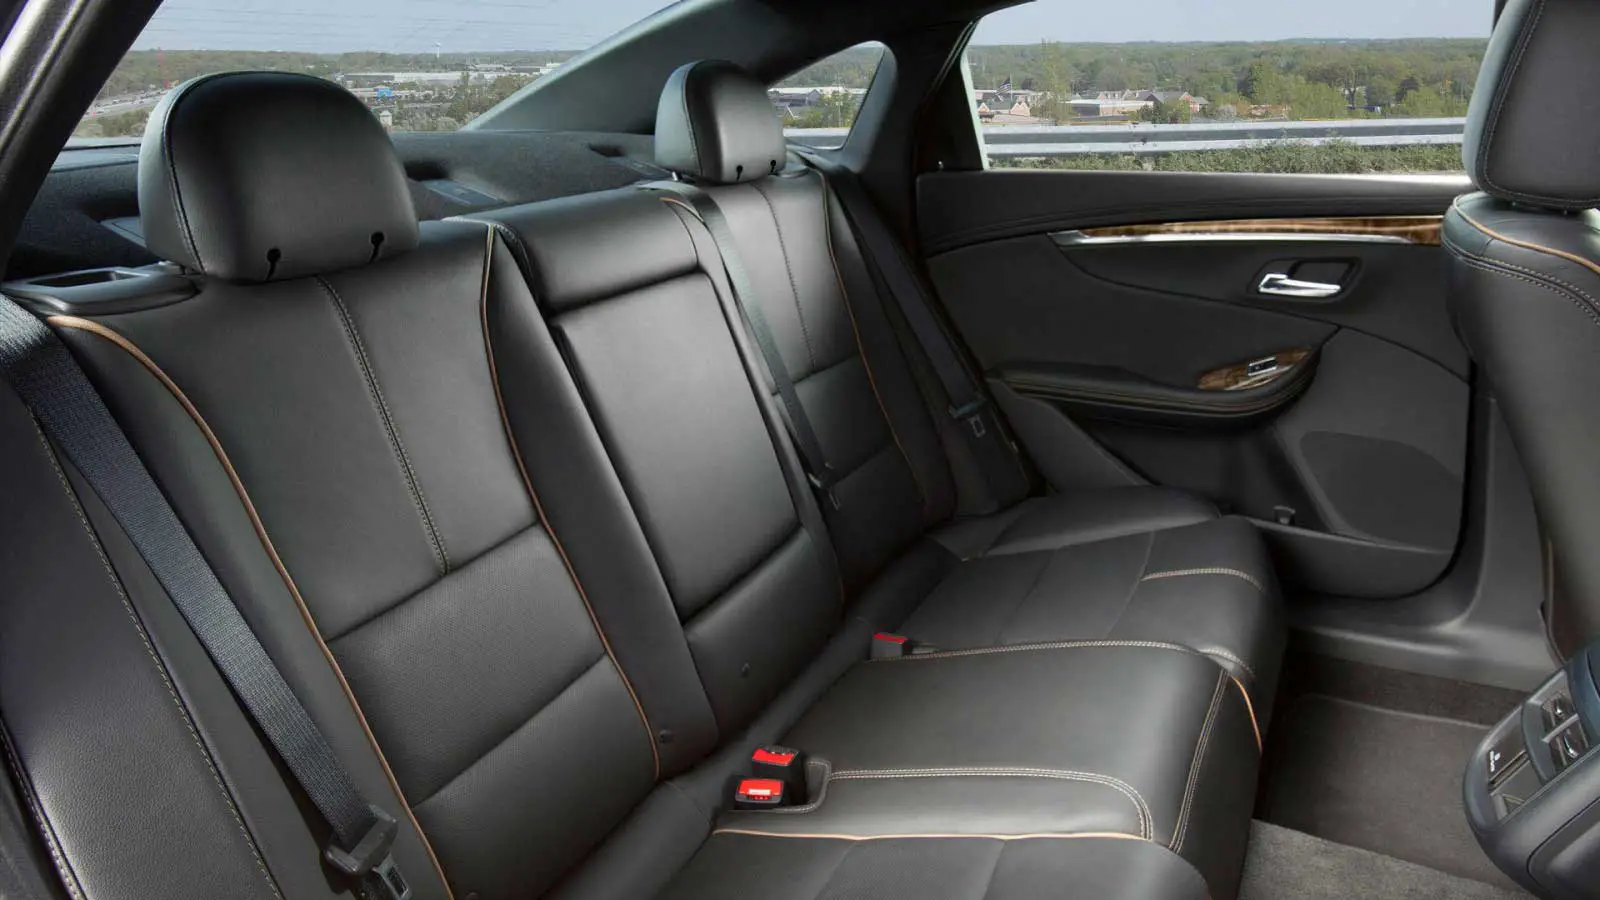 Chevrolet Impala LTZ Interior seats